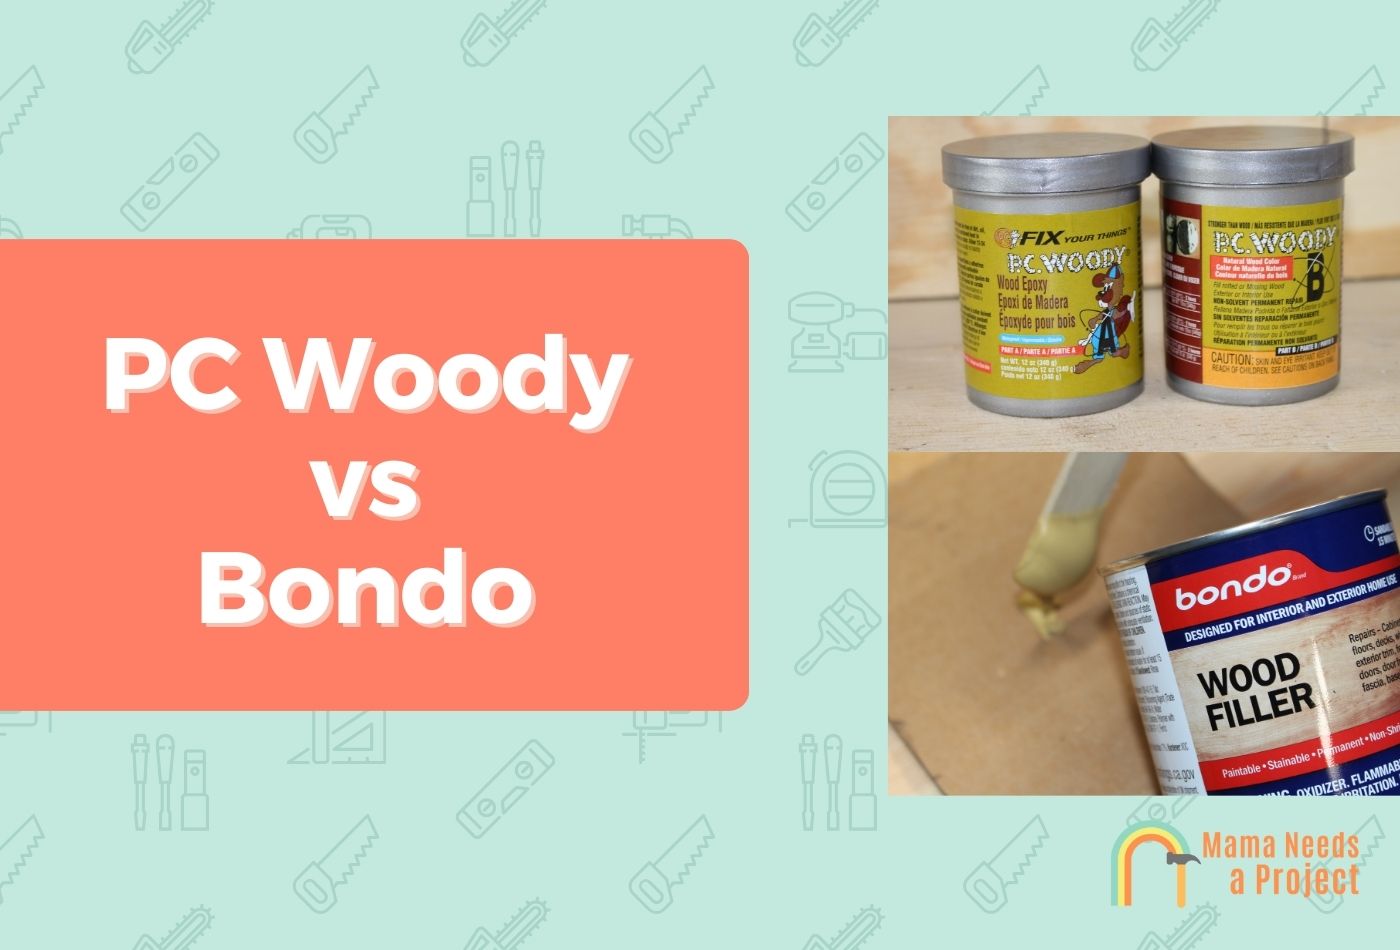 PC Woody vs Bondo